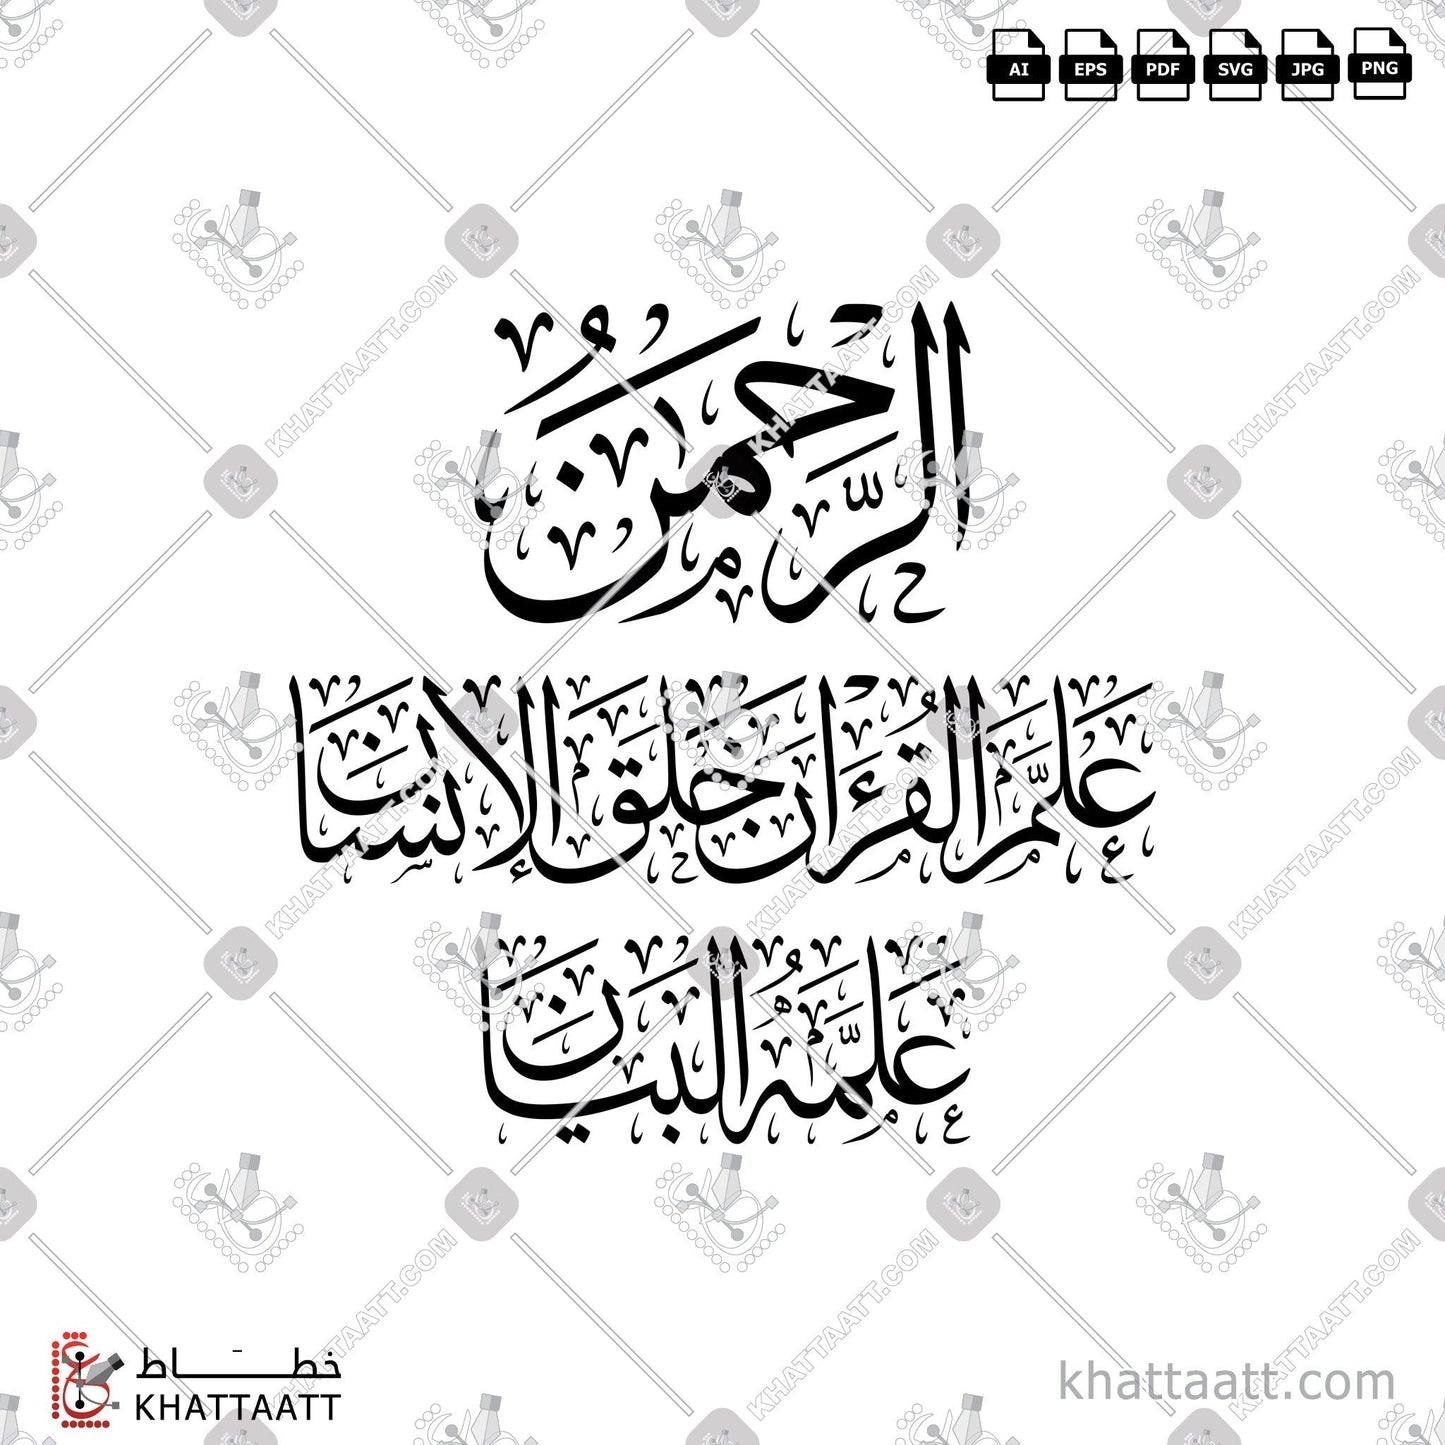 Download Arabic Calligraphy of الرحمن علم القرآن خلق الإنسان علمه البيان in Thuluth - خط الثلث in vector and .png